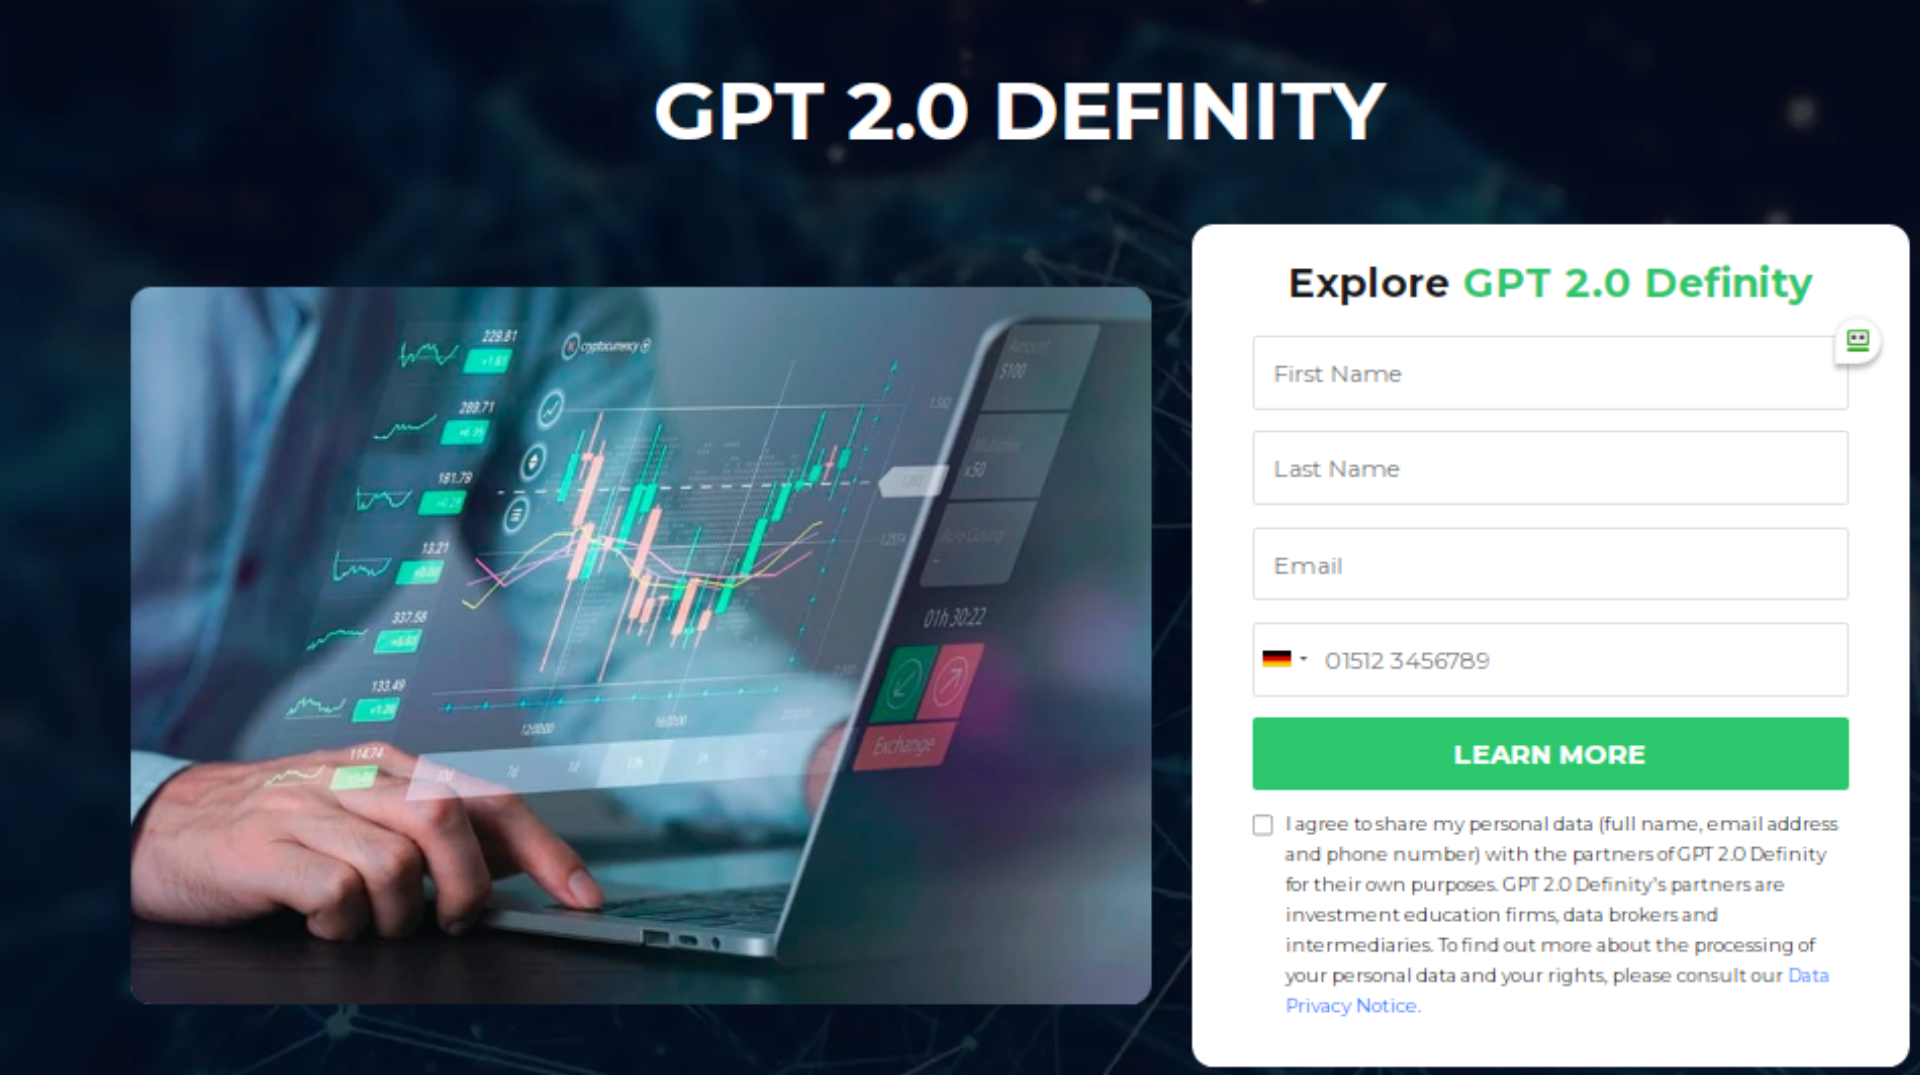 GPT 2.0 DEFINITY